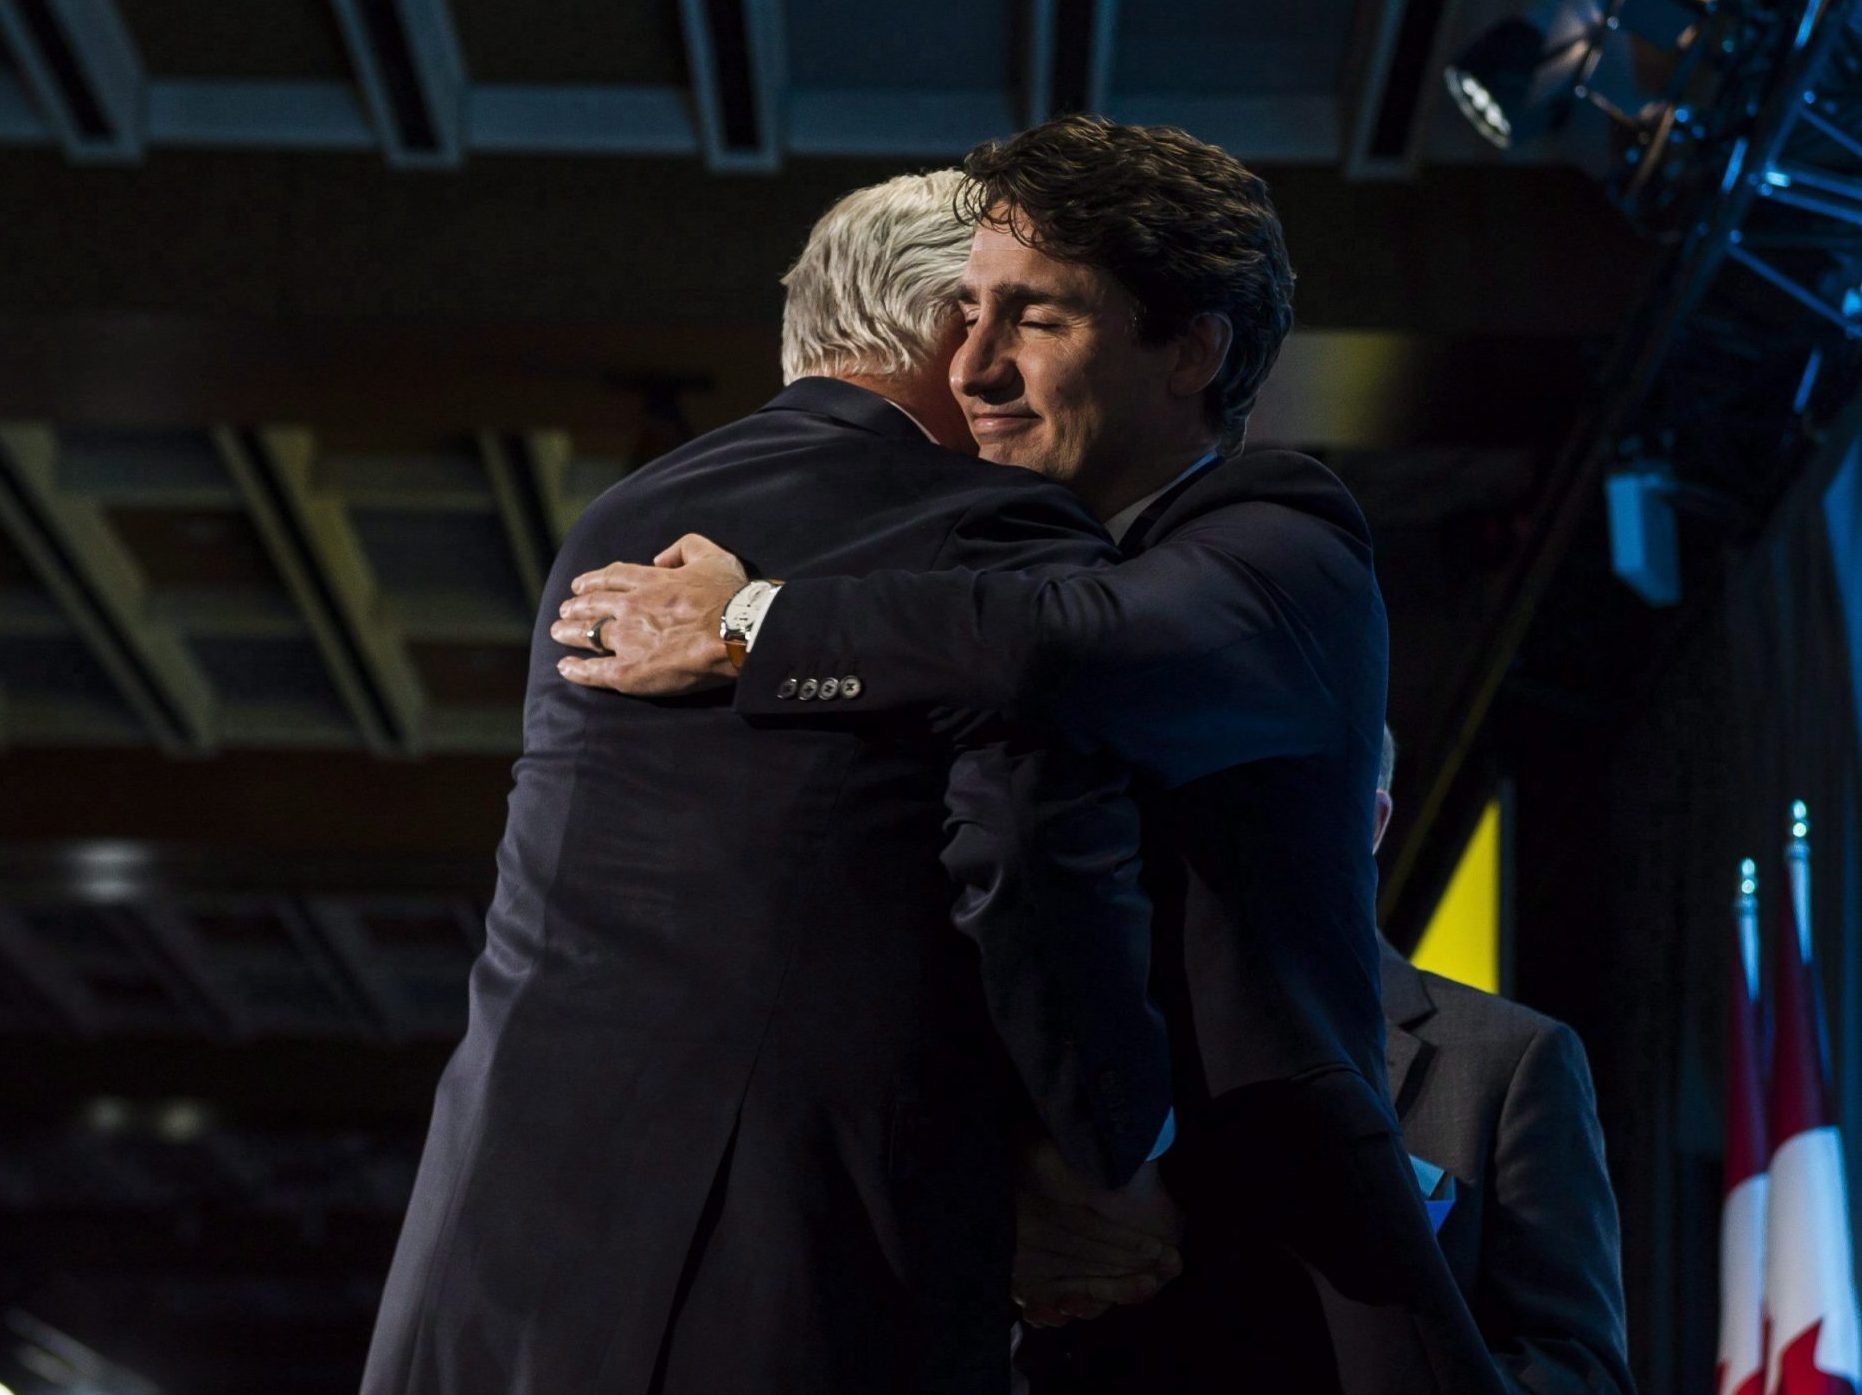 KINSELLA: Justin Trudeau adds former McKinsey executive to his hug club